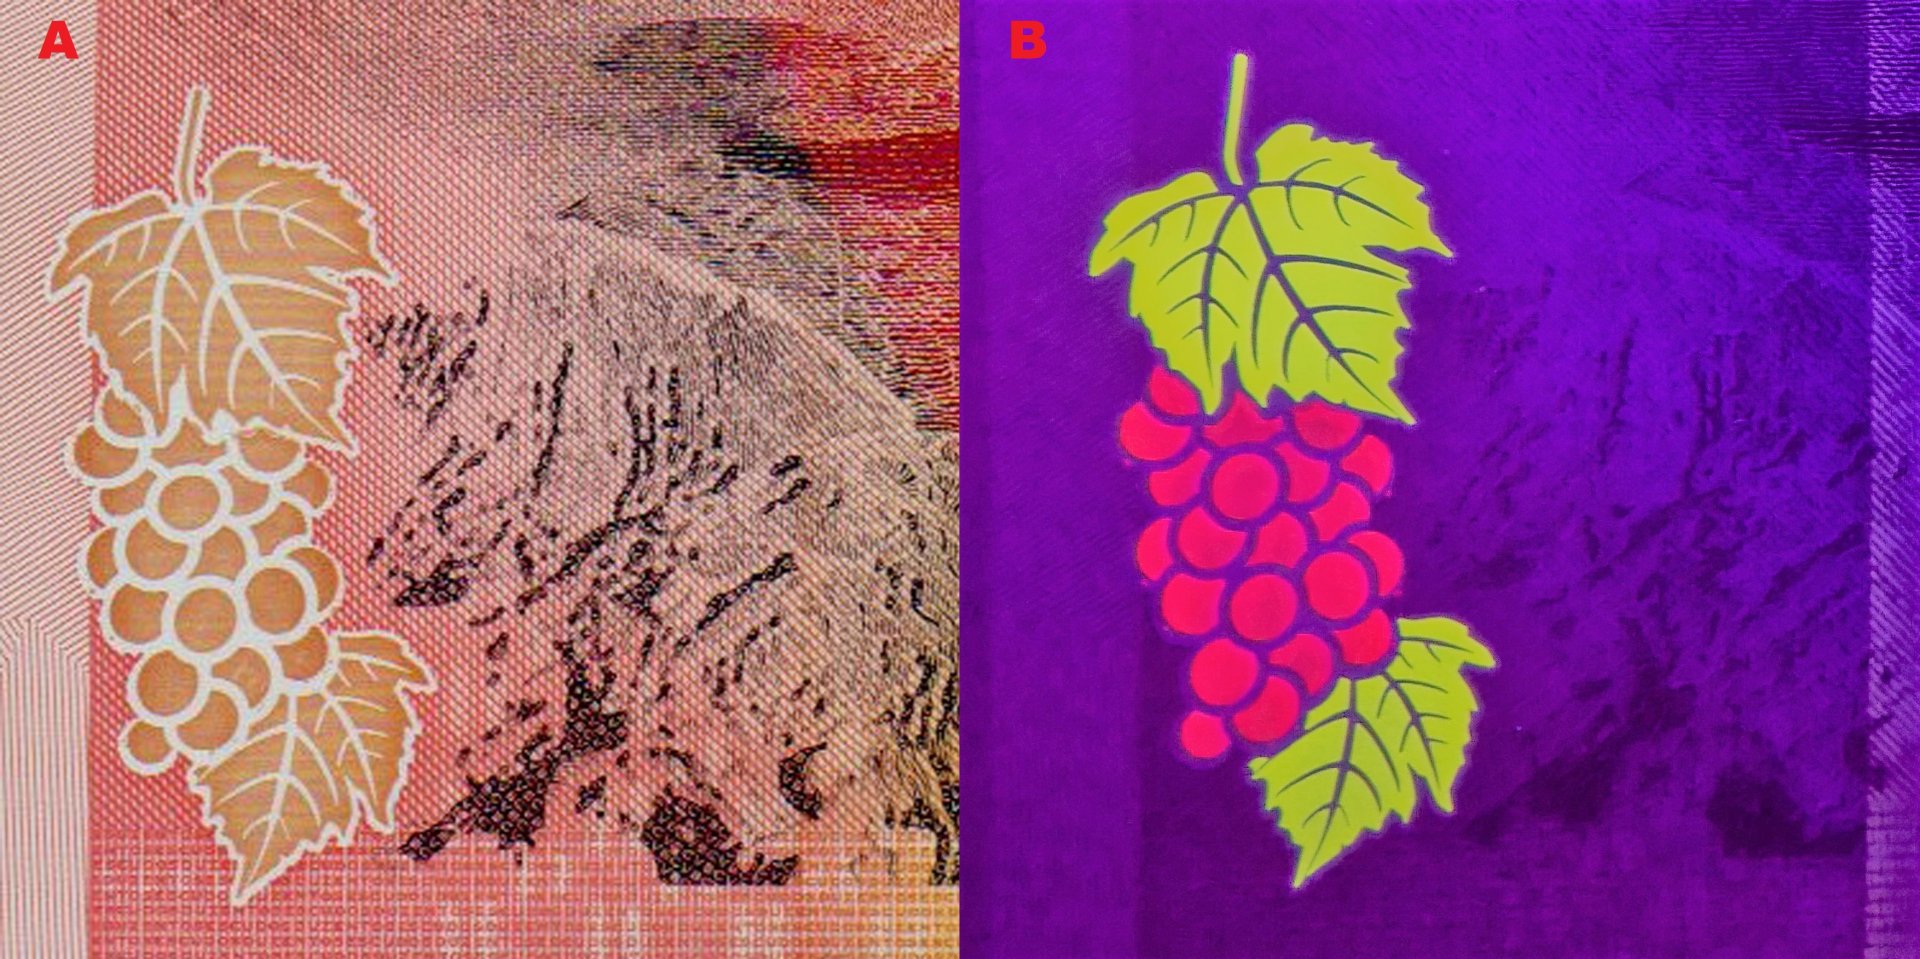 Obrázek 5 A) Motiv vinného hroznu a listů na reverzu bankovky. B) vpravo pod UV nasvícením.